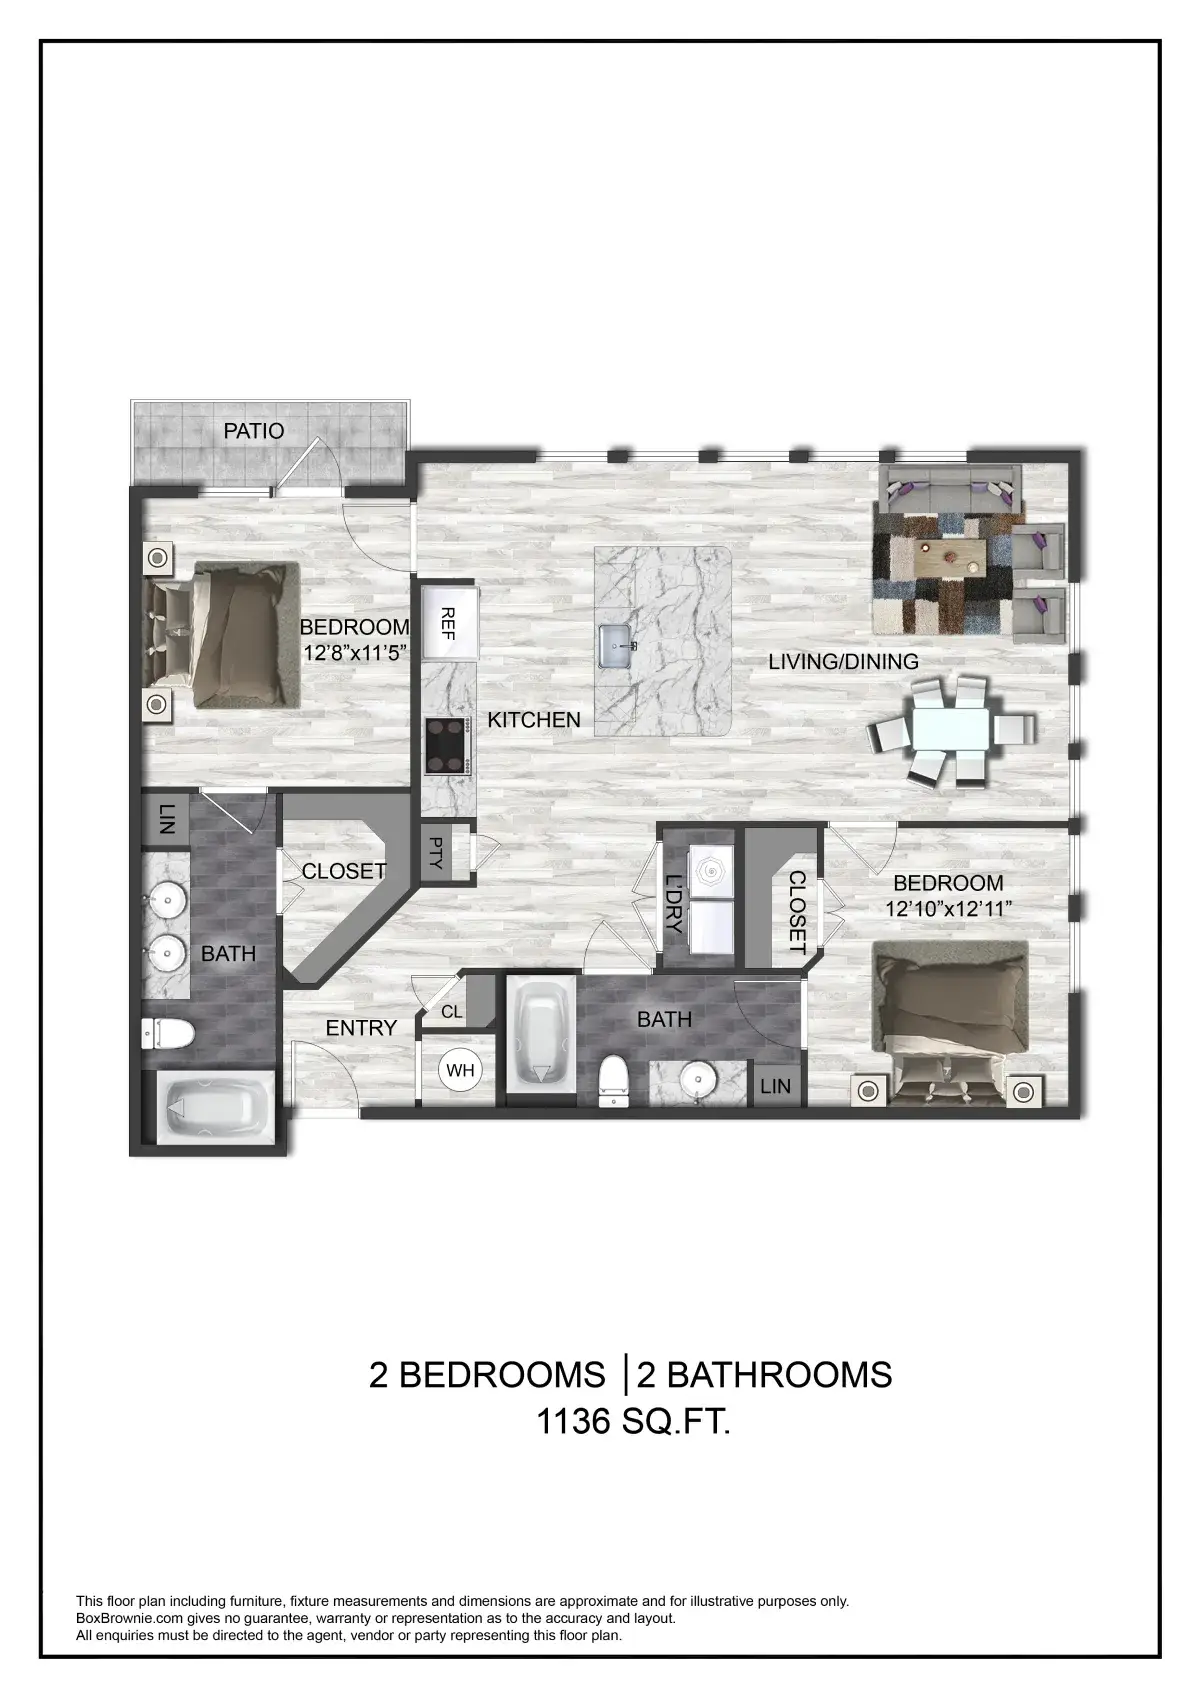 Sinclair houston apartment floorplan 6